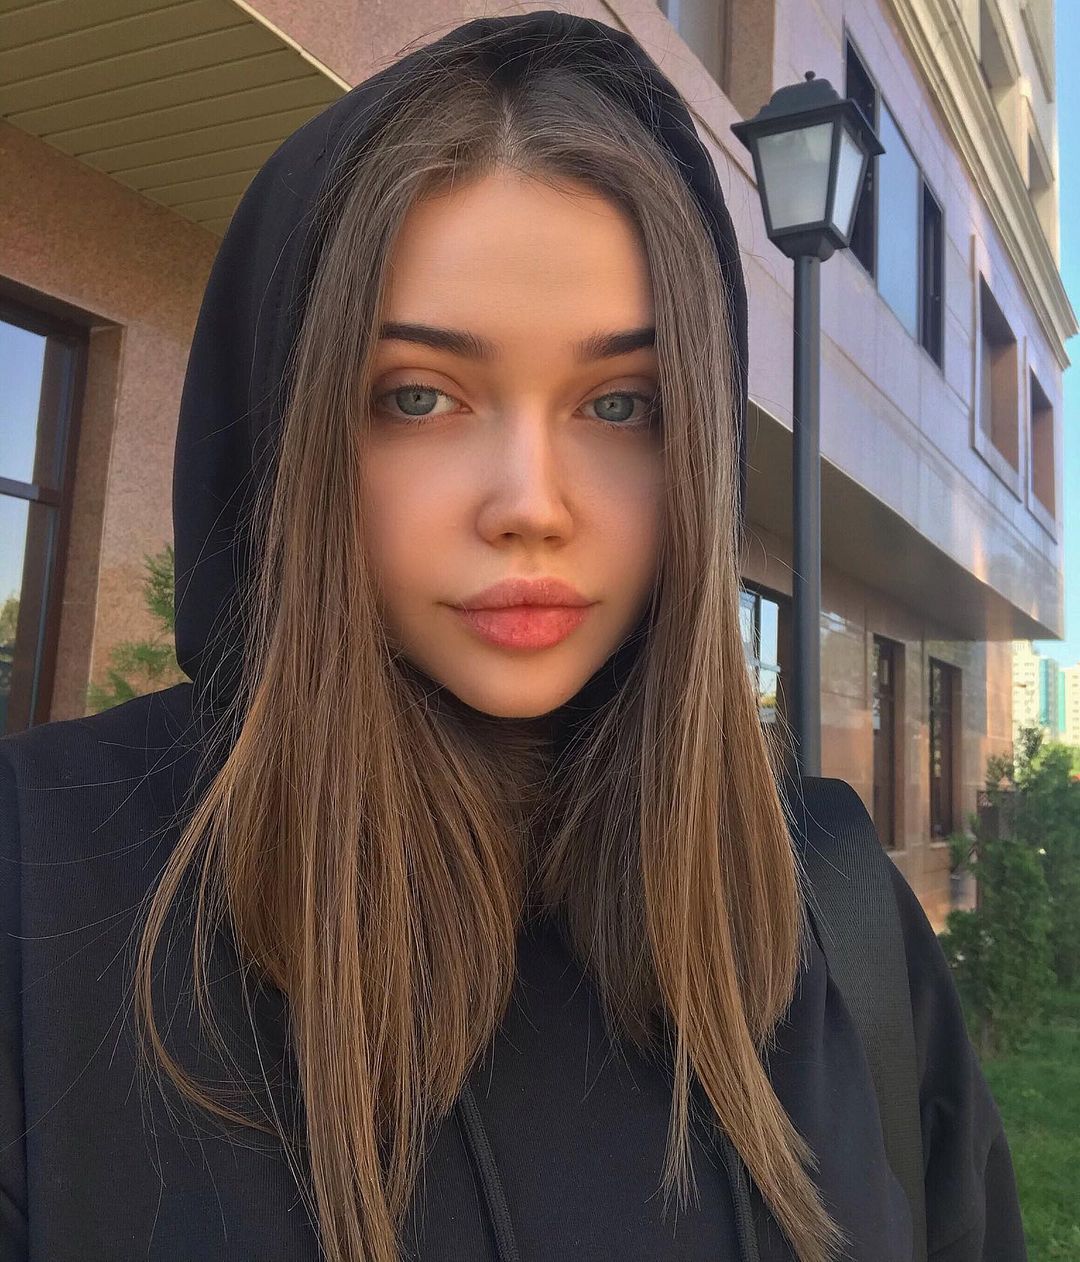 Eliza kayudina 18 hottest pics, eliza kayudina 18 instagram